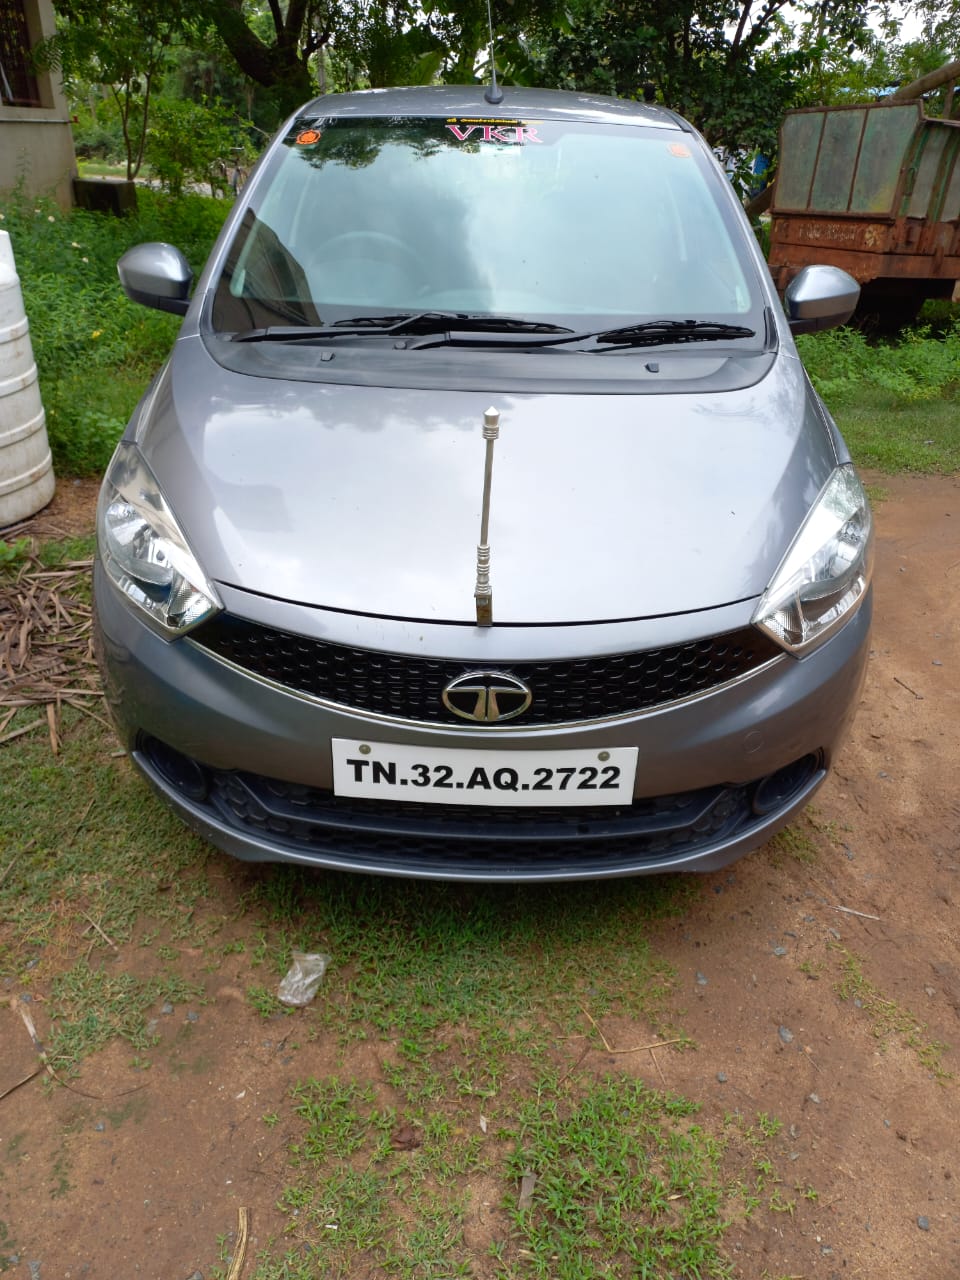 4775-for-sale-Tata-Motors-Tiago-Diesel-First-Owner-2019-TN-registered-rs-450000